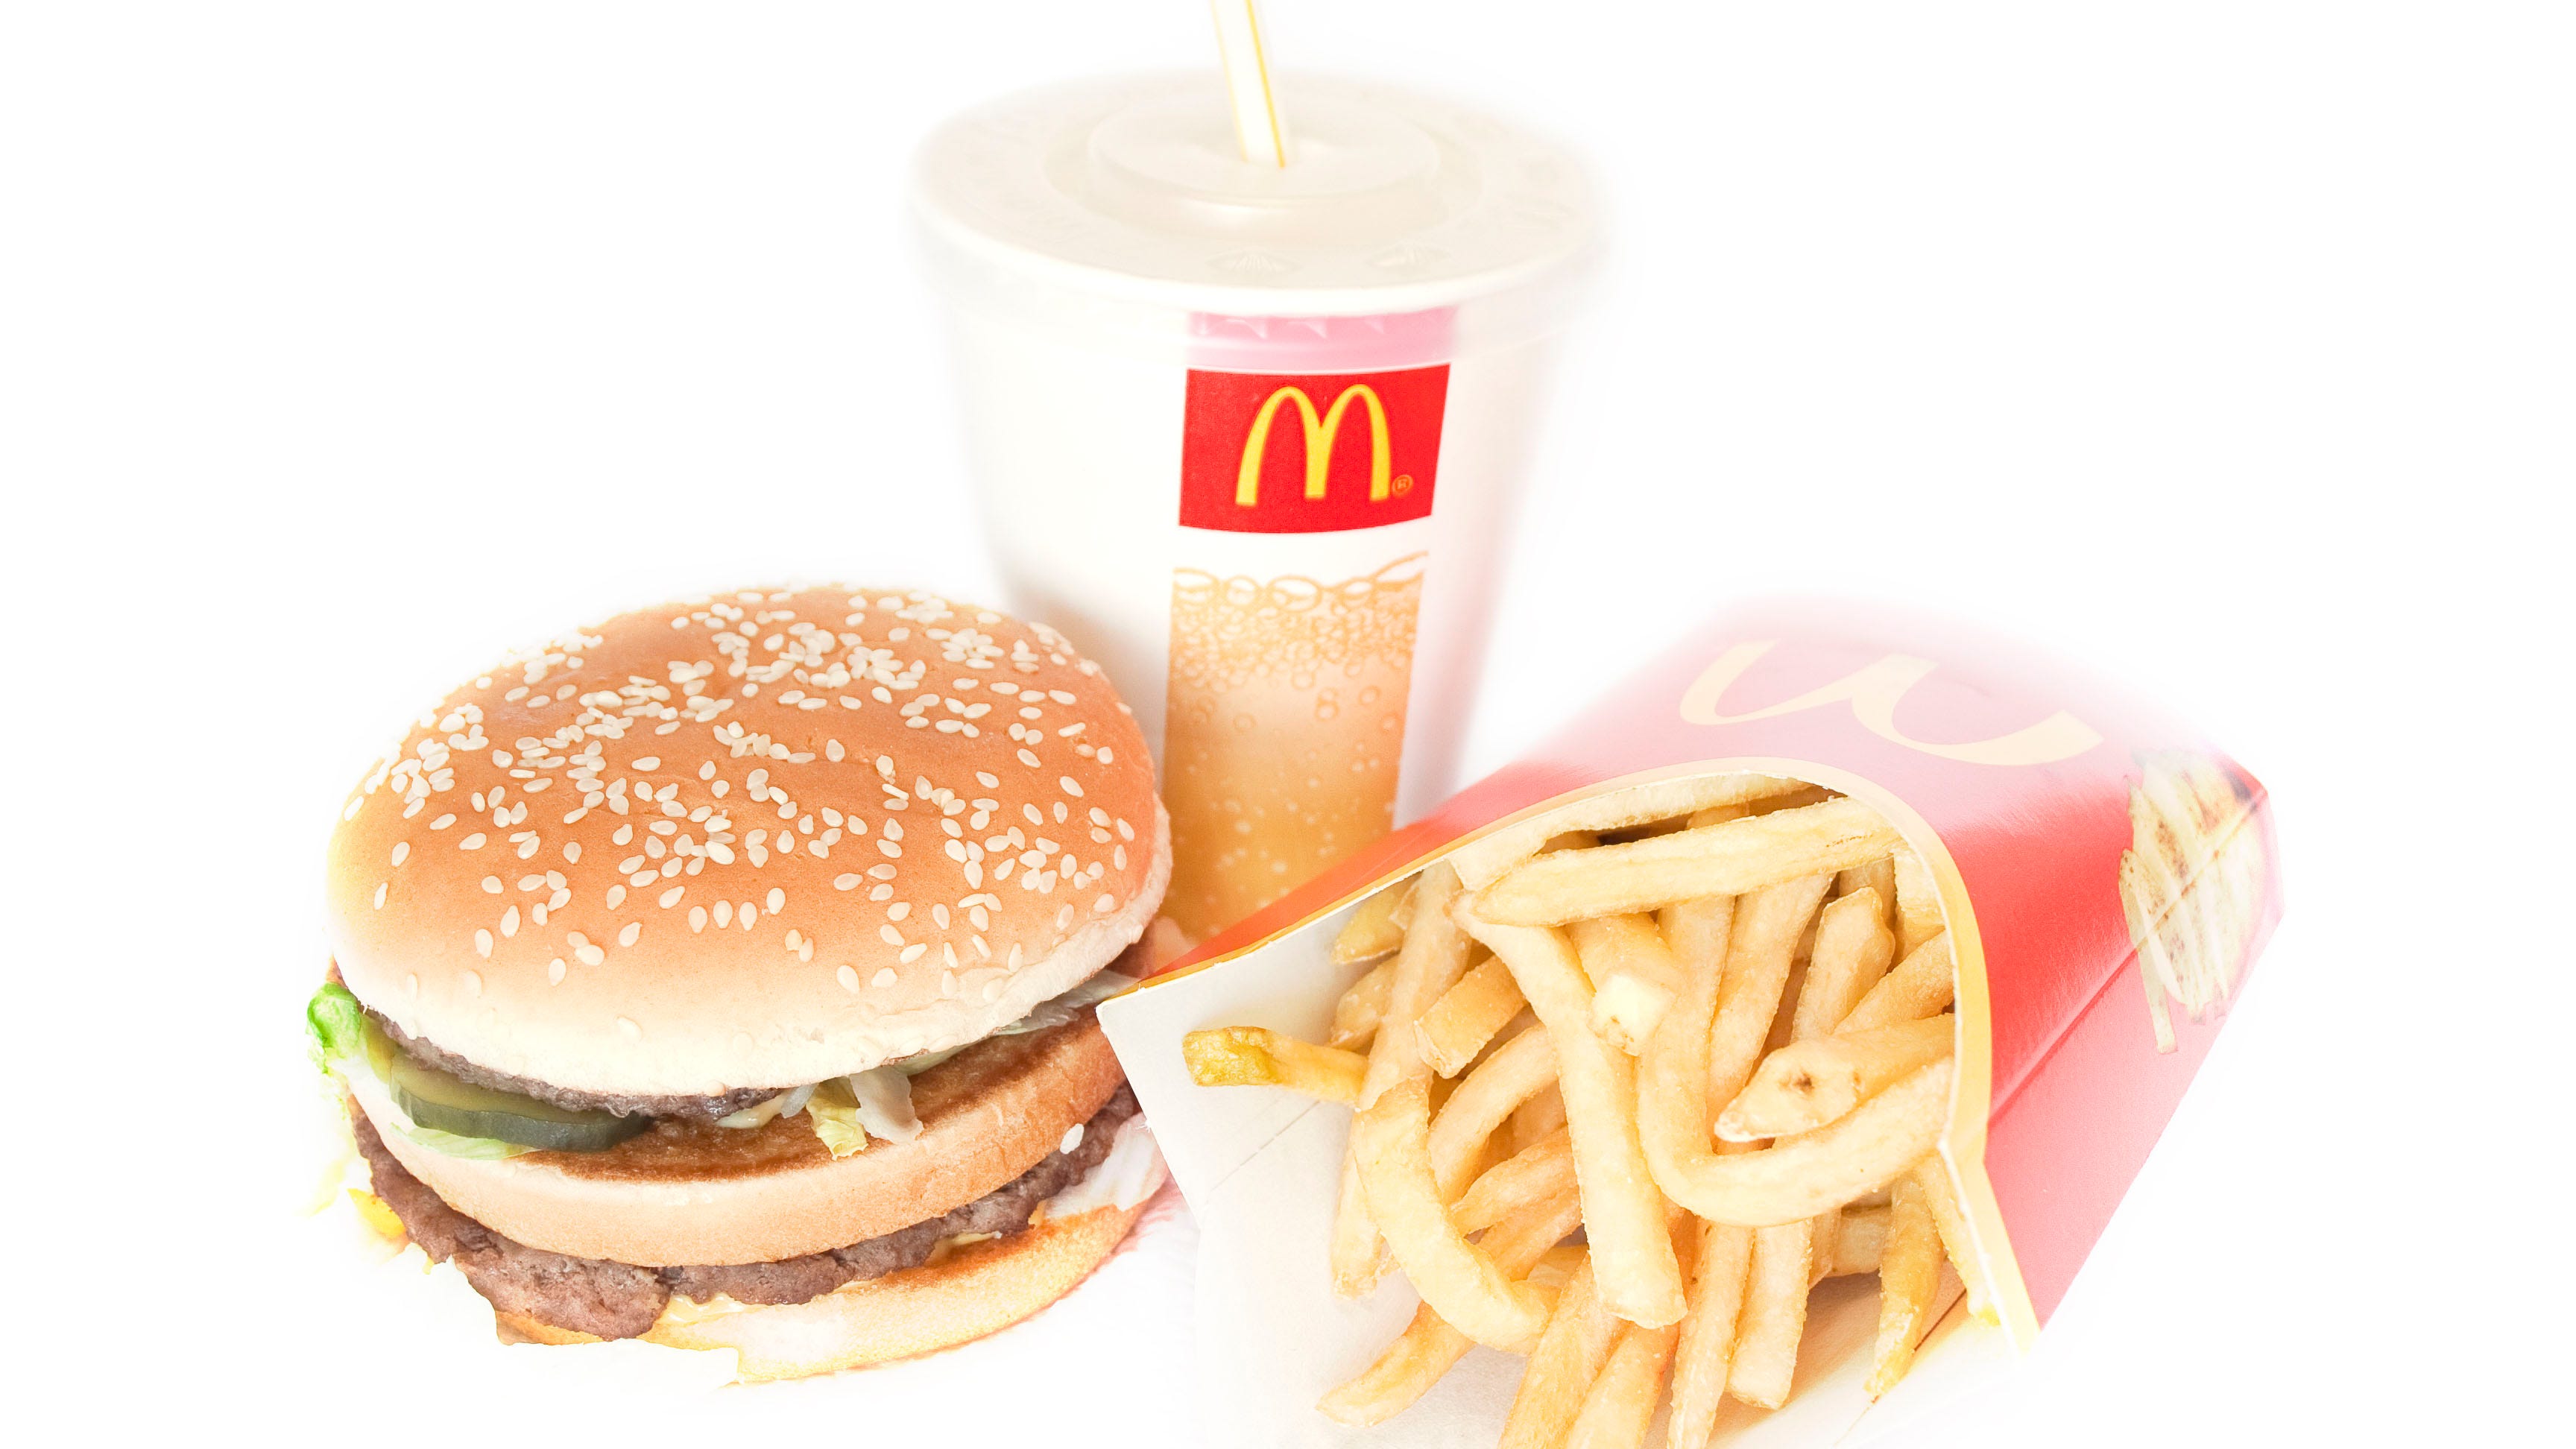 FOX NEWS: 'Hamburglar' steals thousands of dollars of food through McDonald's app